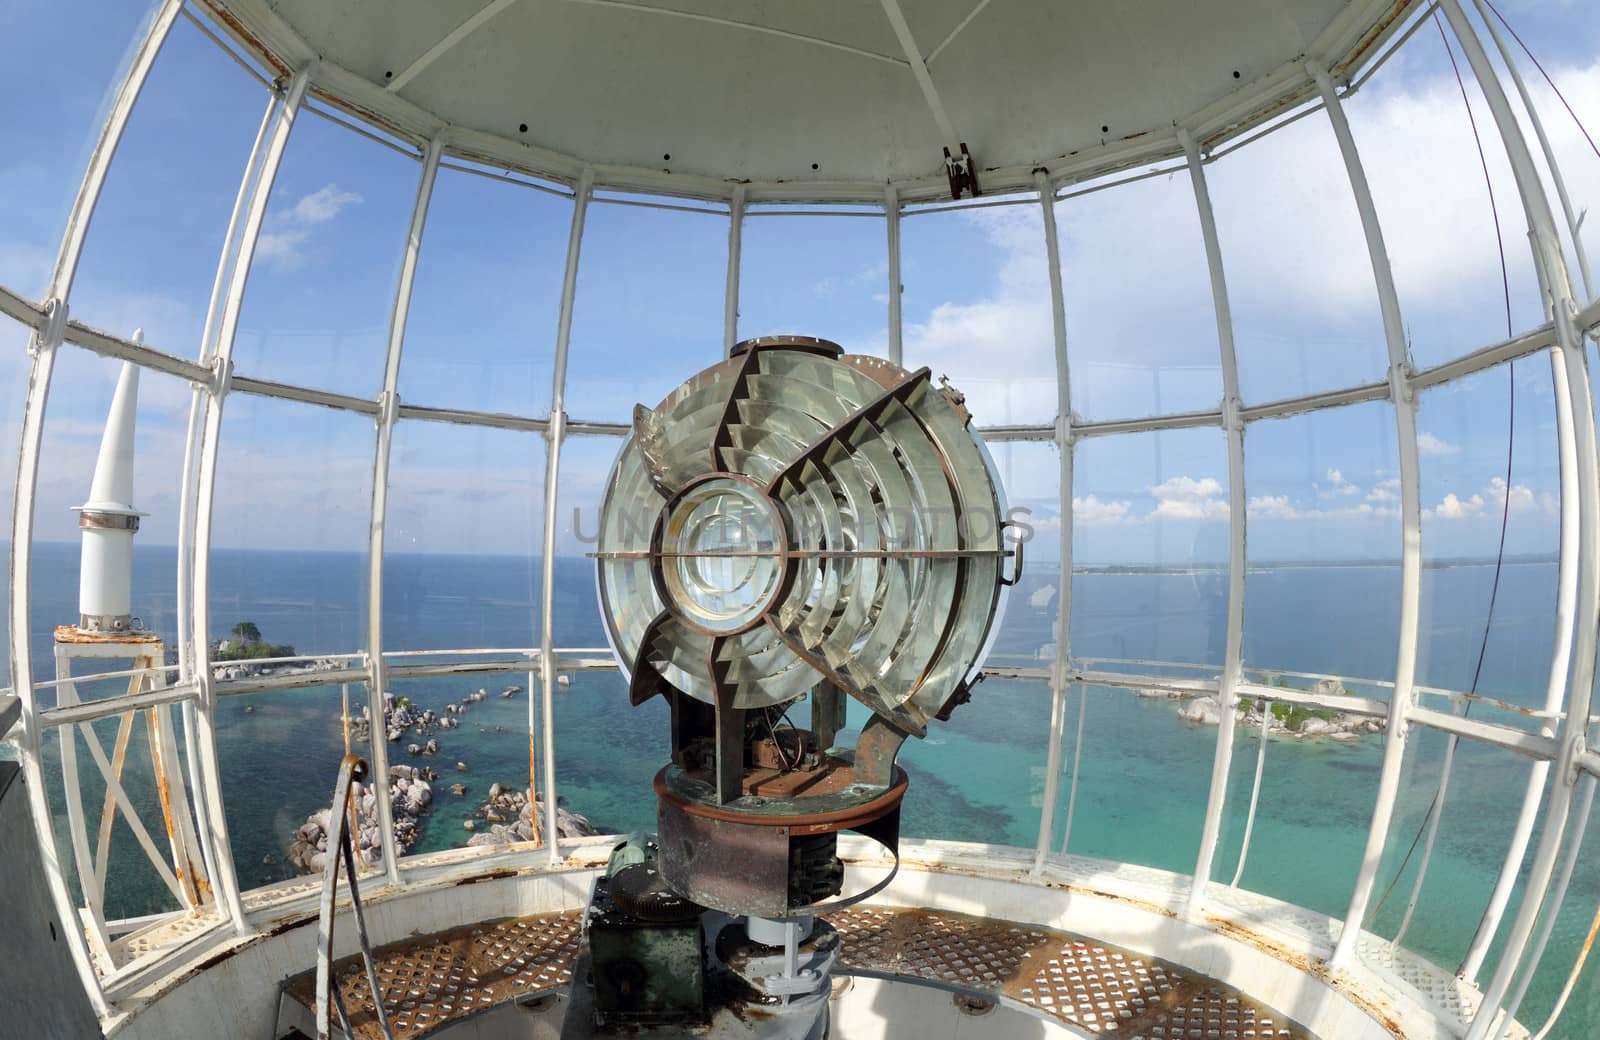 Large fresnel lens of lighthouse beacon